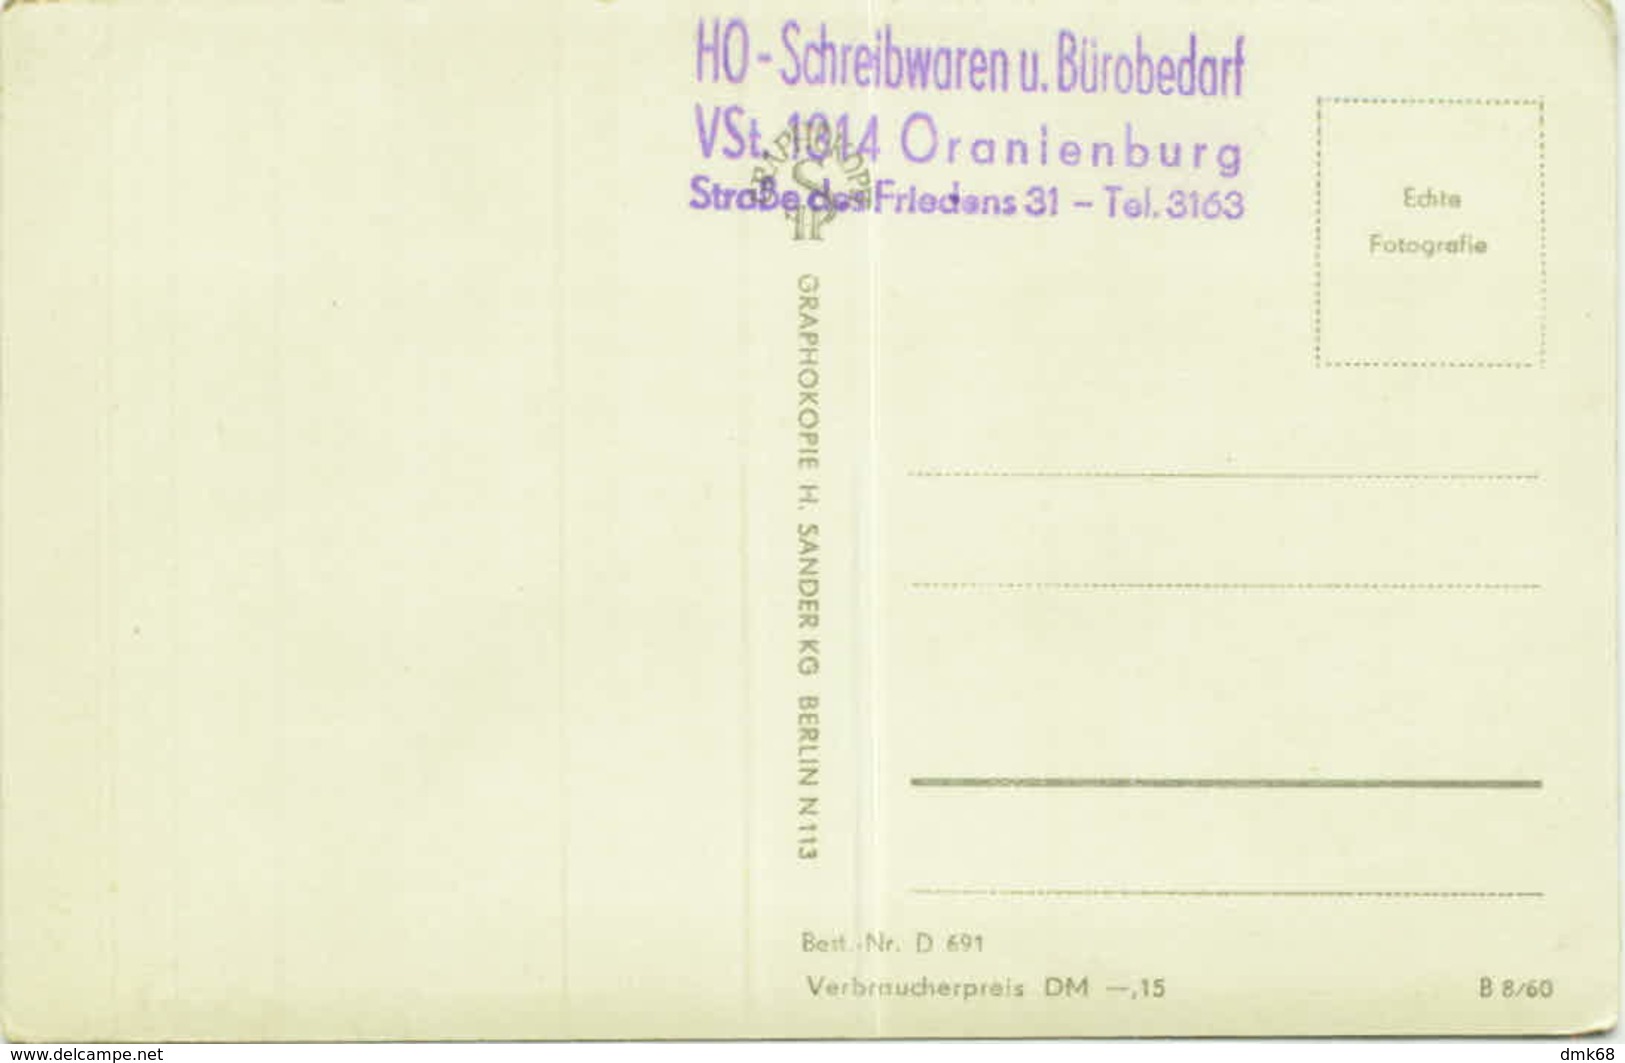 AK GERMANY - ORANIENBURG - SCHLOS - EDIT H. SANDER - 1950s (BG3016) - Oranienburg